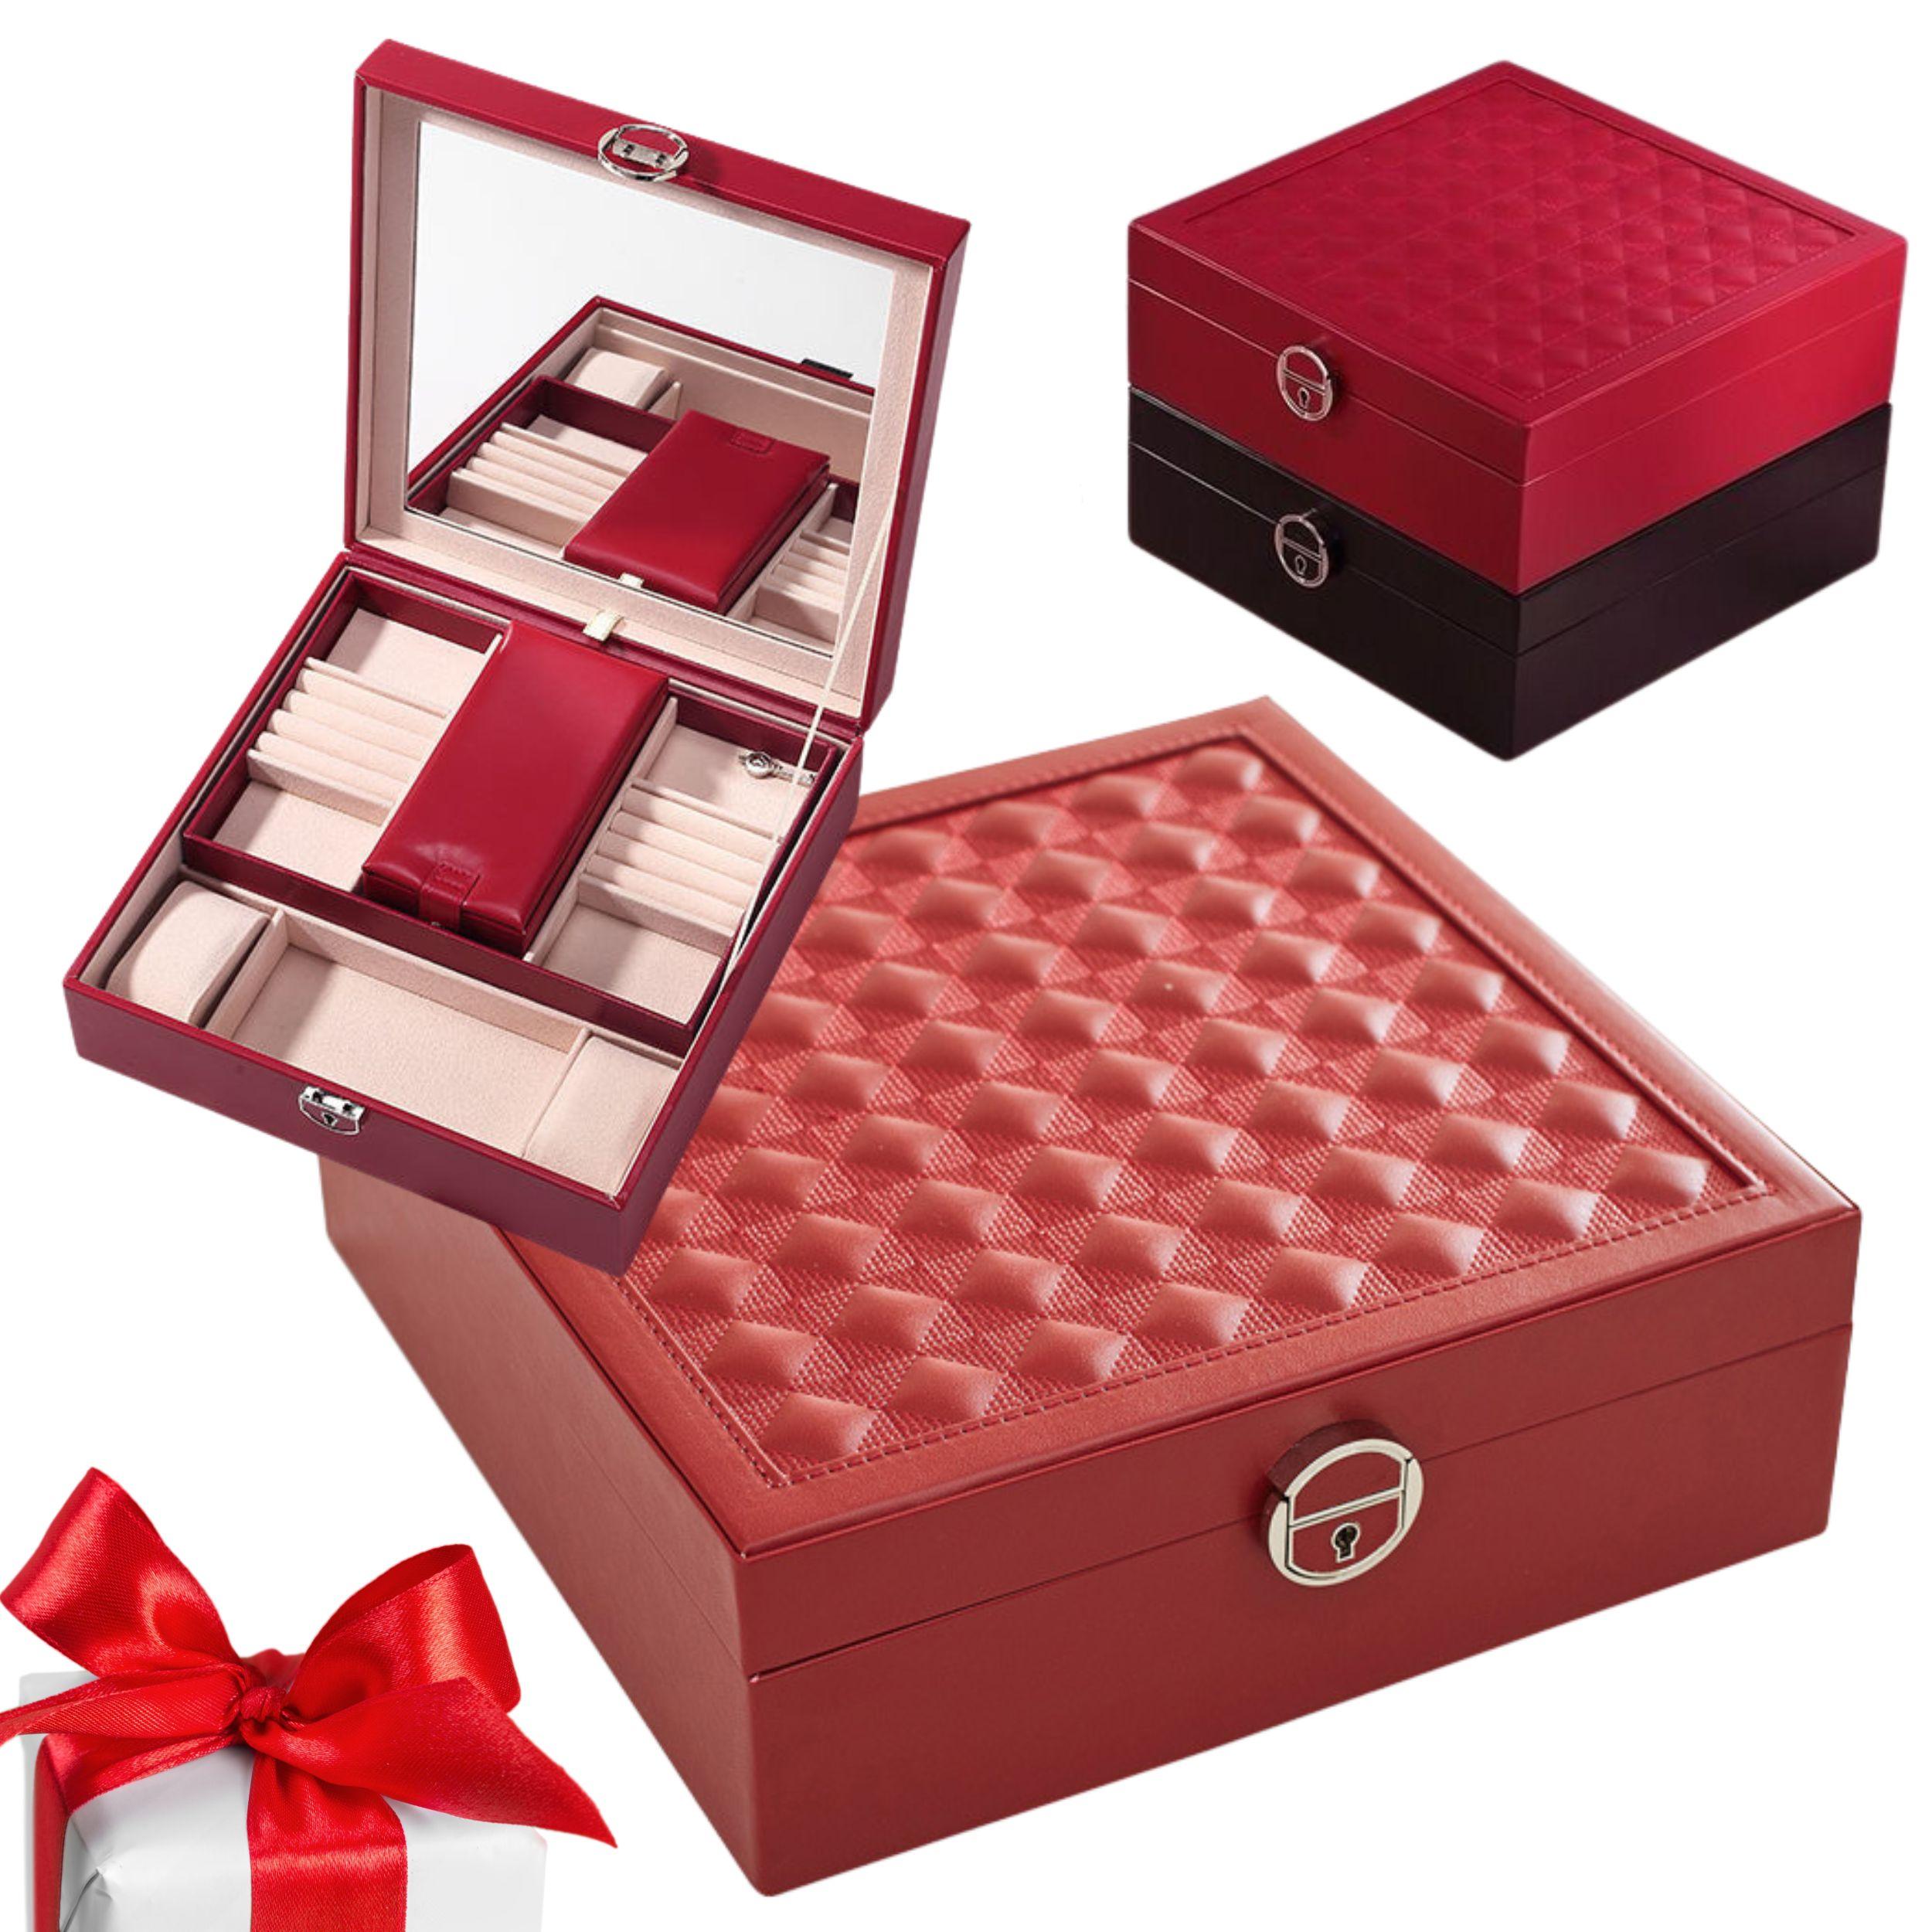 Casket, jewelery box - red